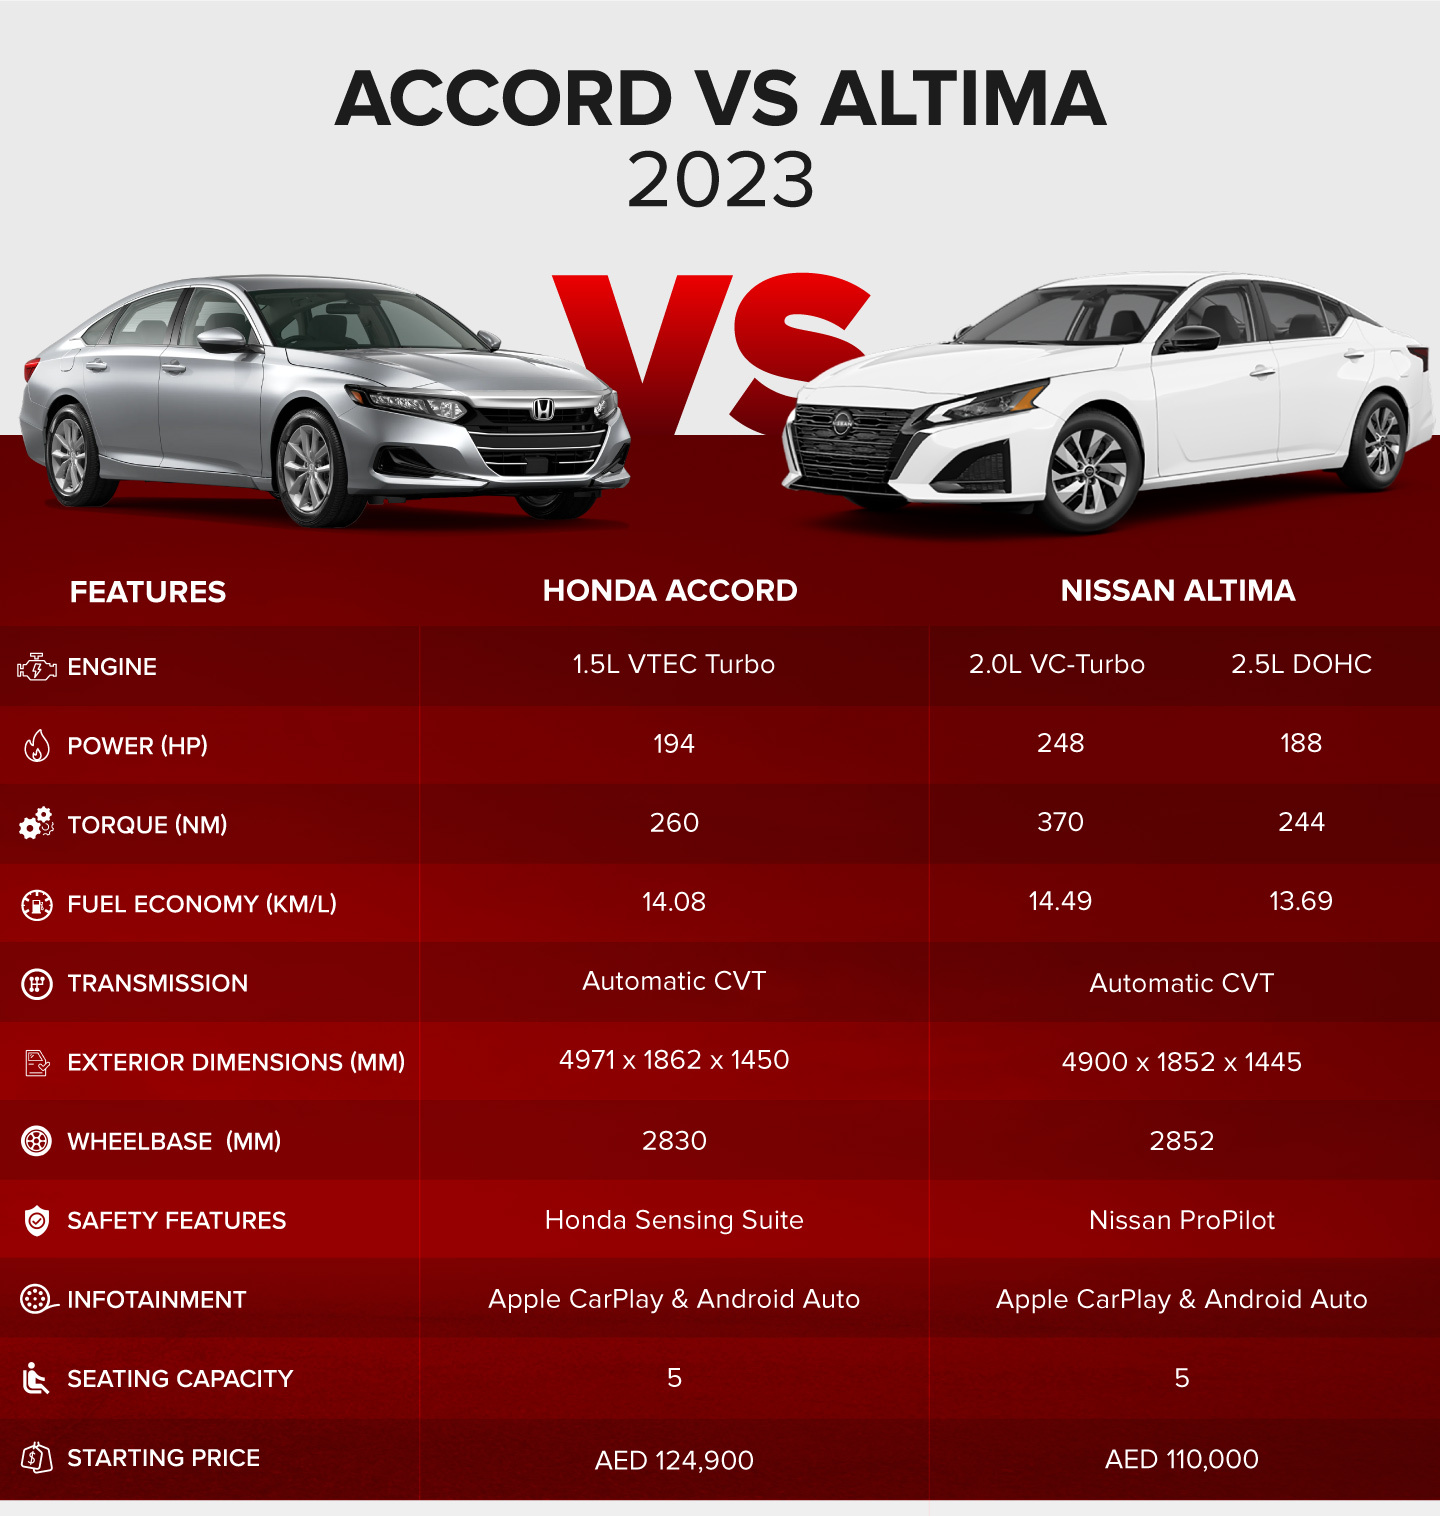 Feature comparison of Honda Accord and Nissan Altima